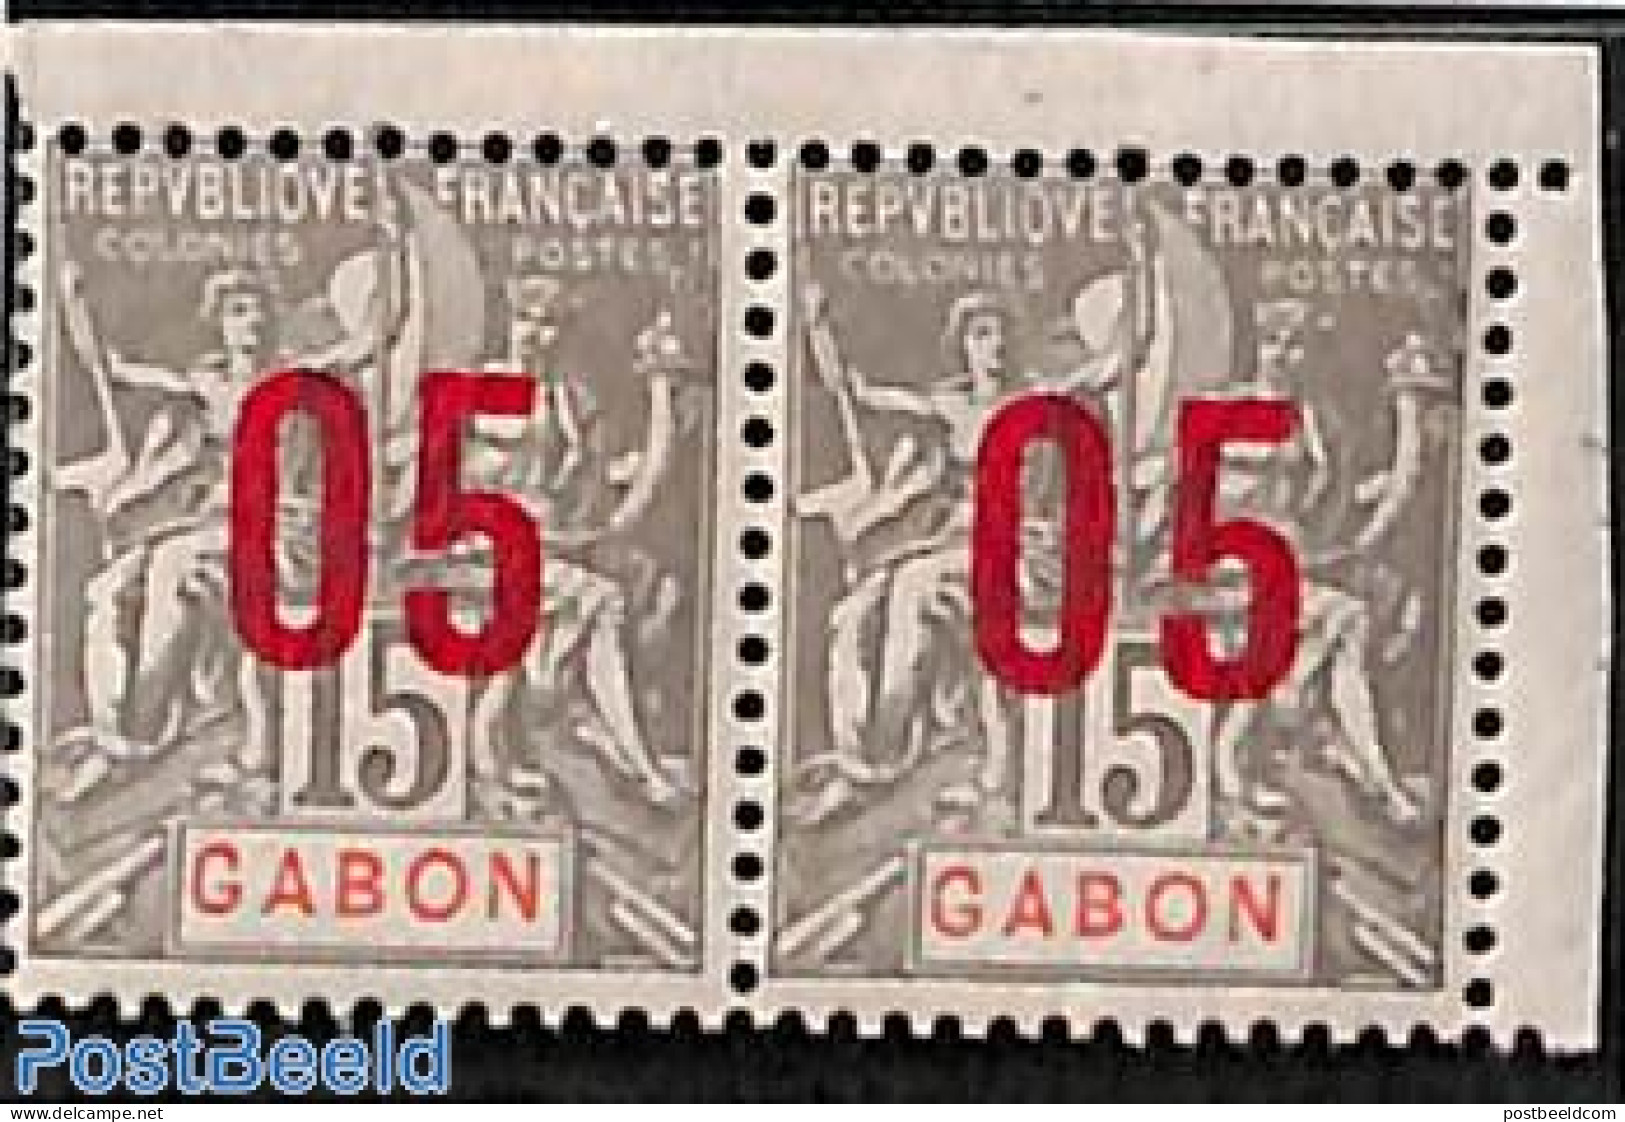 Gabon 1912 Pair With Both Overprint Types, Mint NH - Nuovi